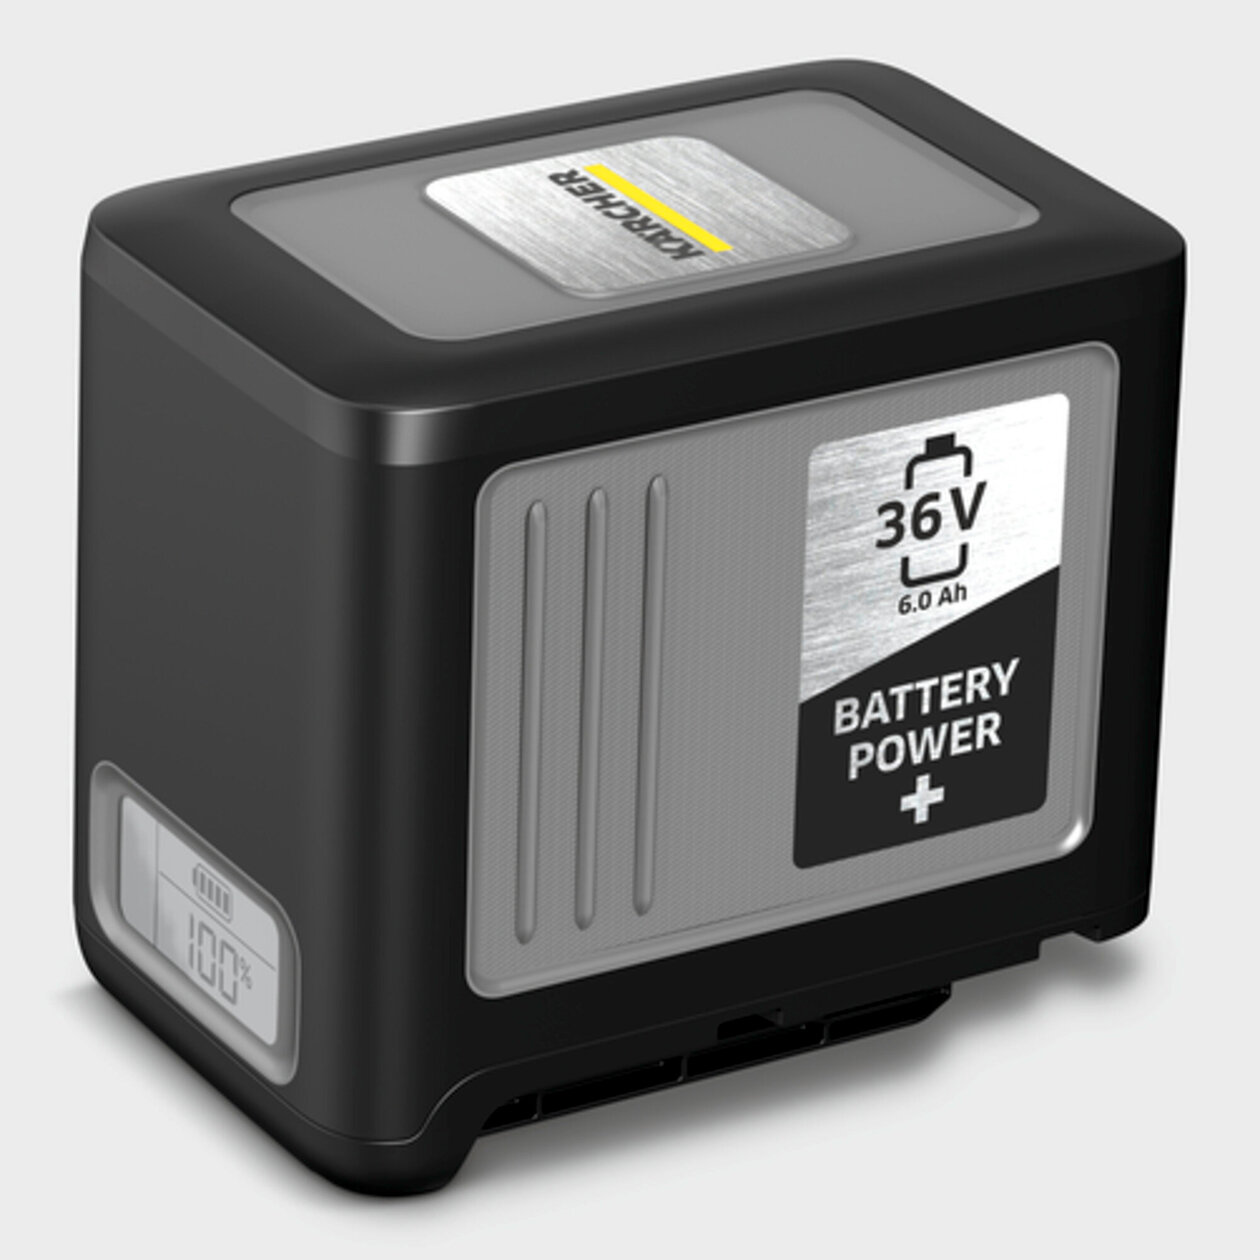  Battery Power +36/60: 36 V Battery Power akkumulátorplatform